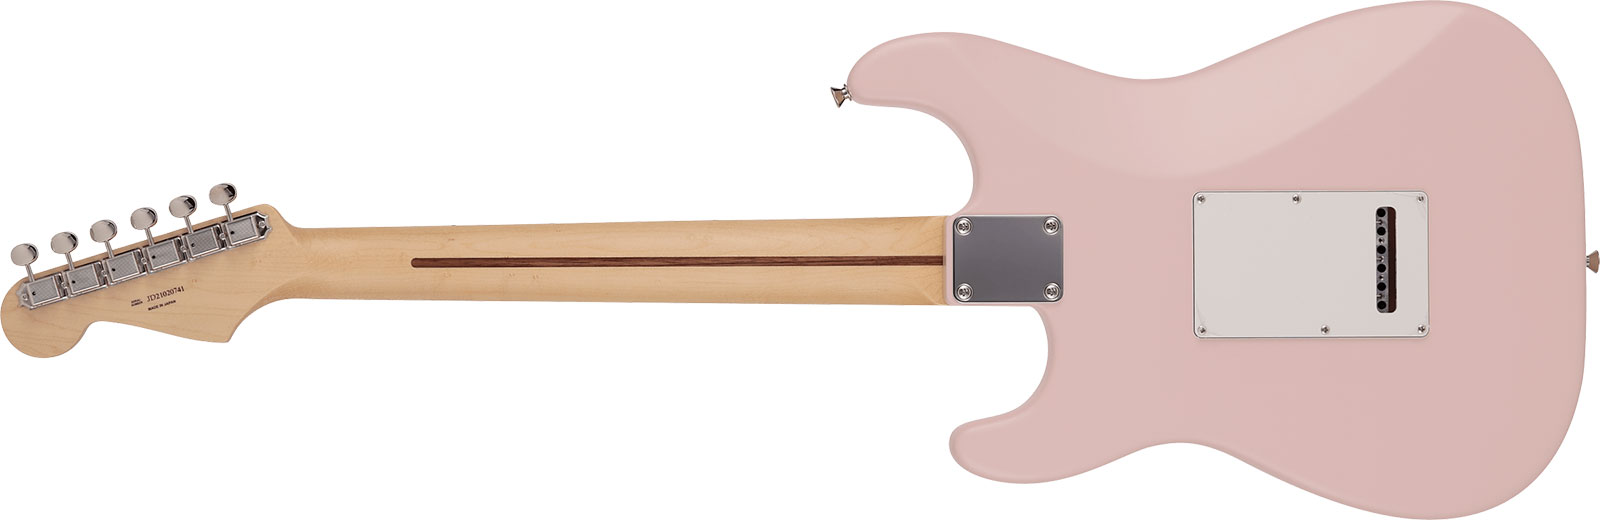 Fender Strat Junior Mij Jap 3s Trem Rw - Satin Shell Pink - Guitare Électrique Enfant - Variation 1